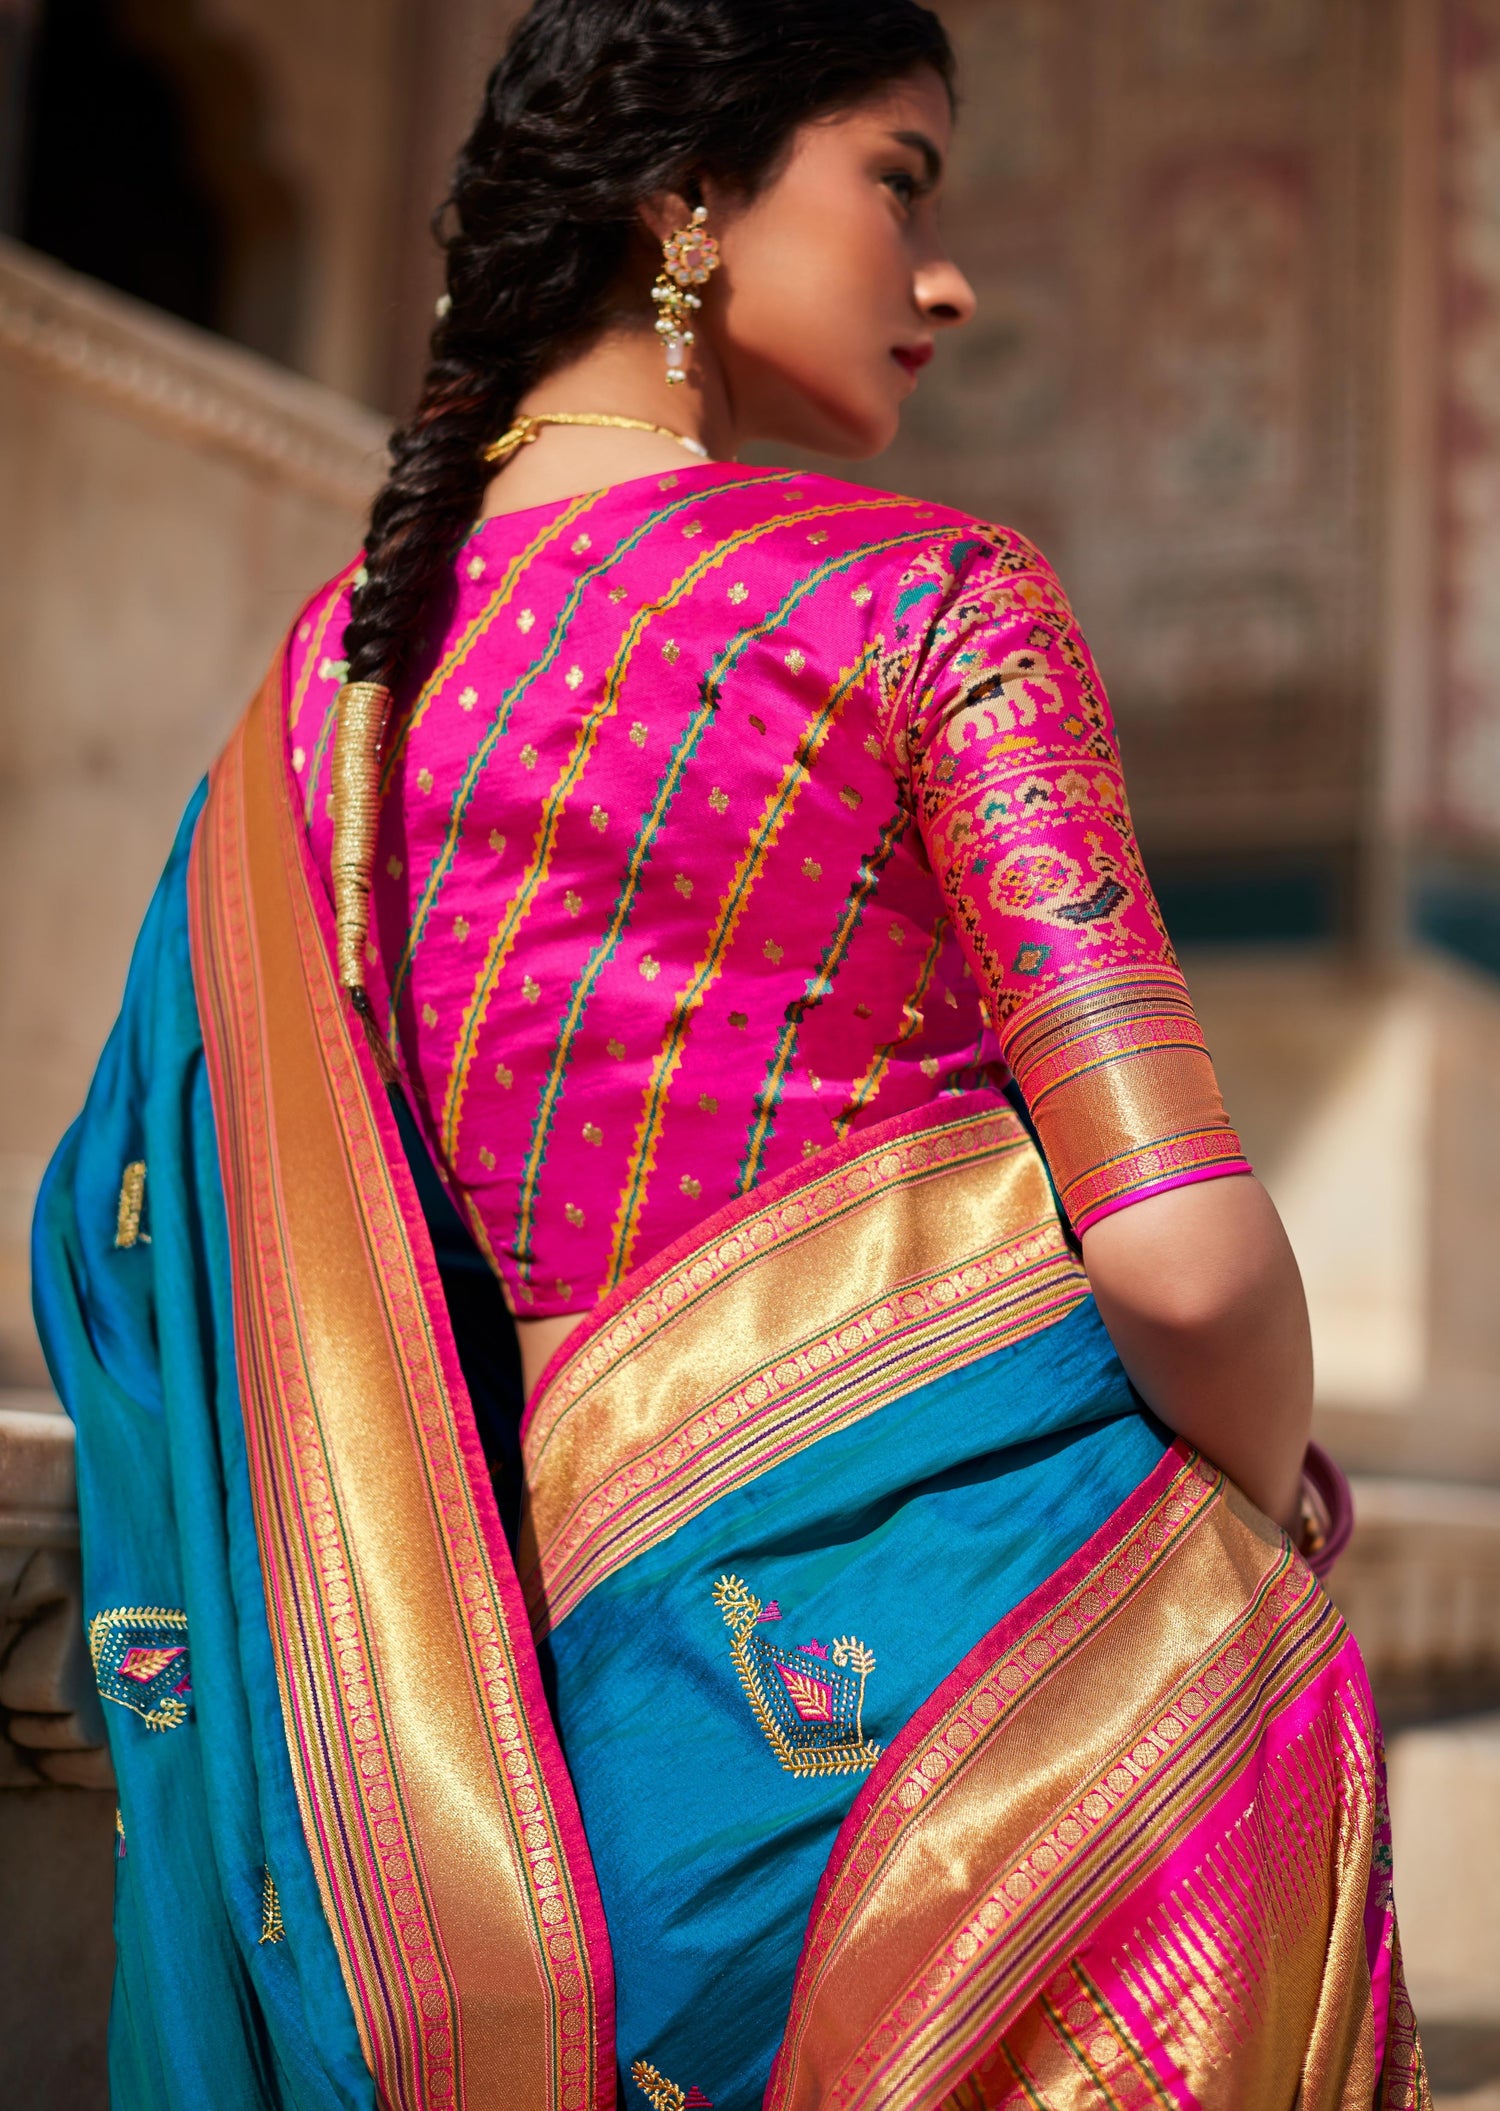 banarasi saree hairstyle look Archives - Samyakk